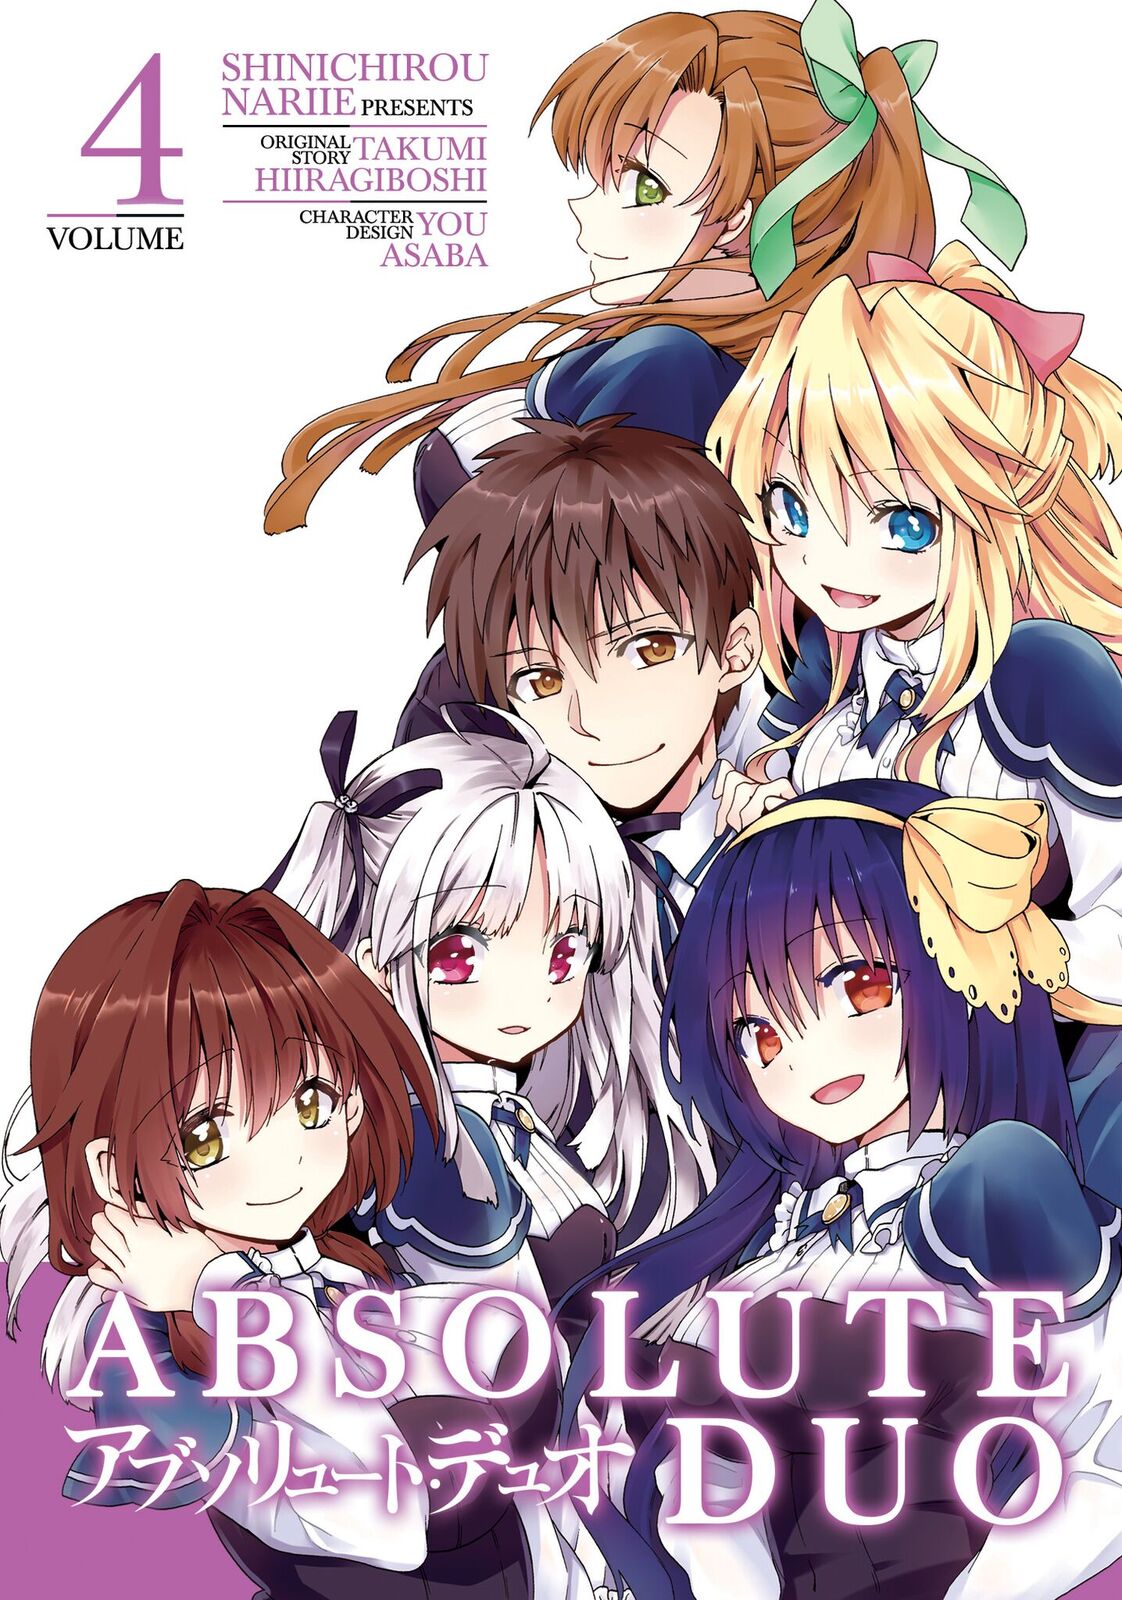 Absolute Duo: Sinopsis, Manga, Anime, Personajes Y Más